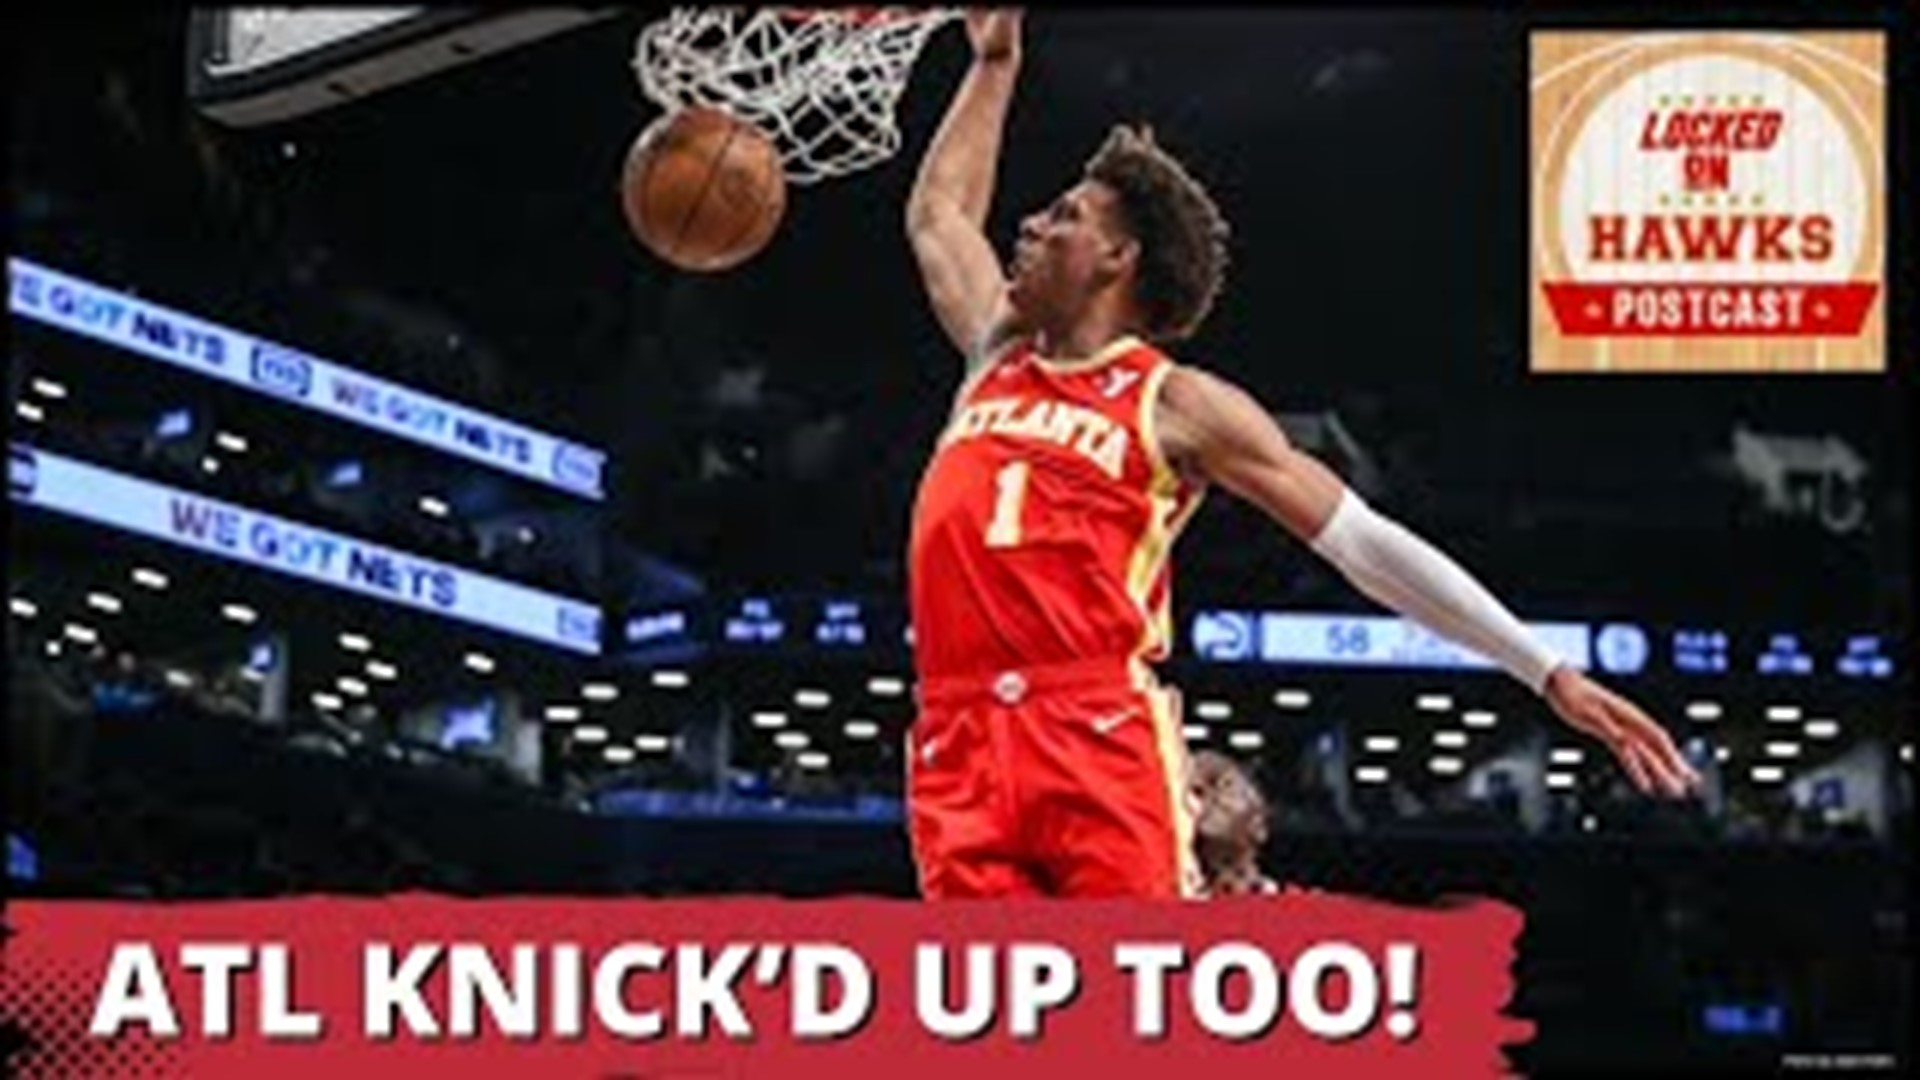 Postcast Atlanta Hawks Show No Empathy For Injured Rival New York Knicks In Msg